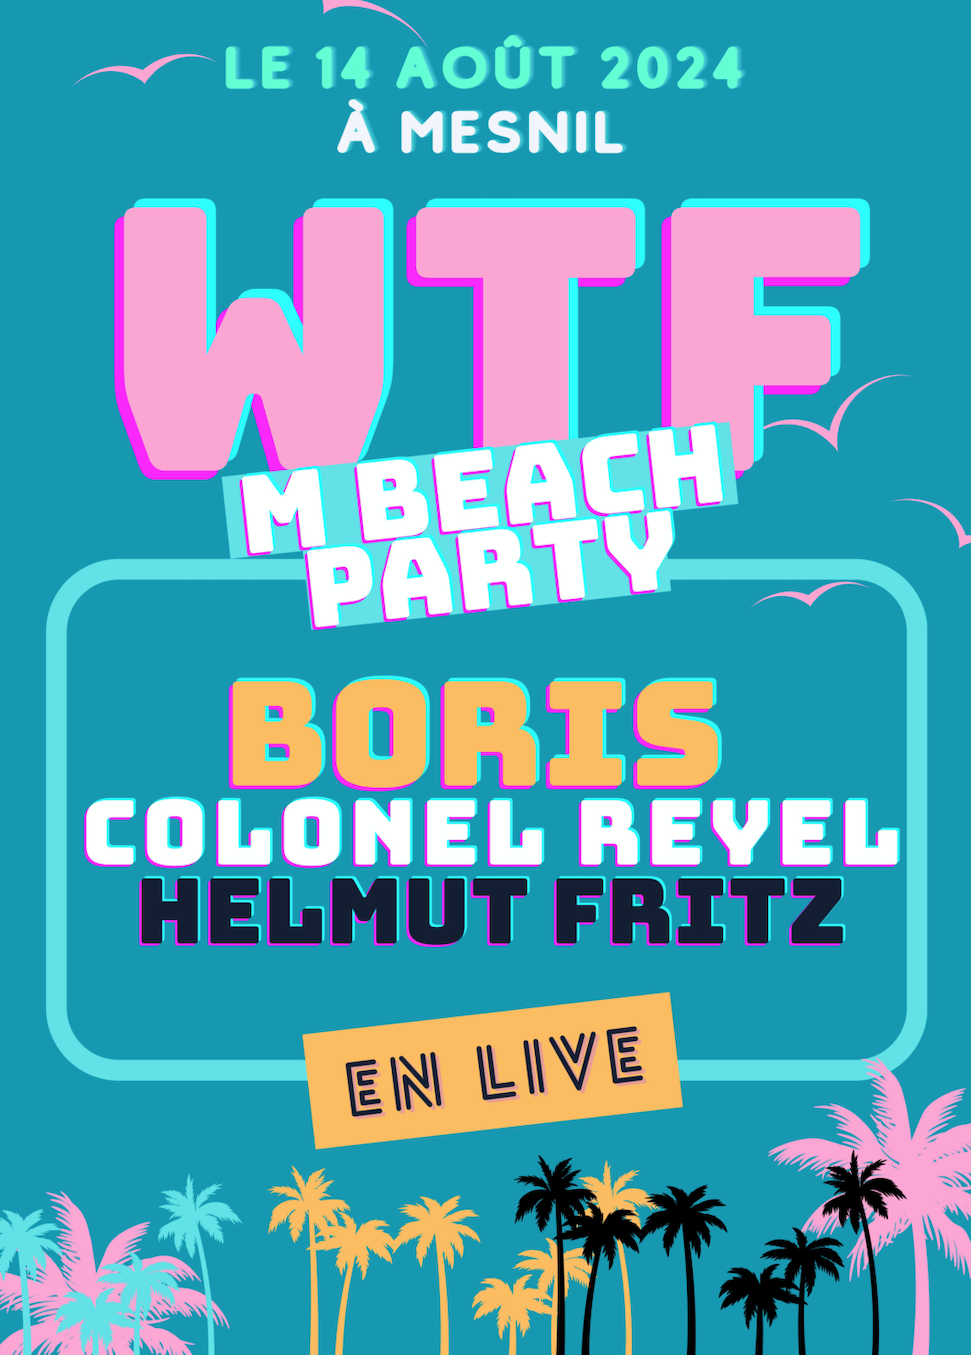 WTF M Beach Party Helmut Fritz